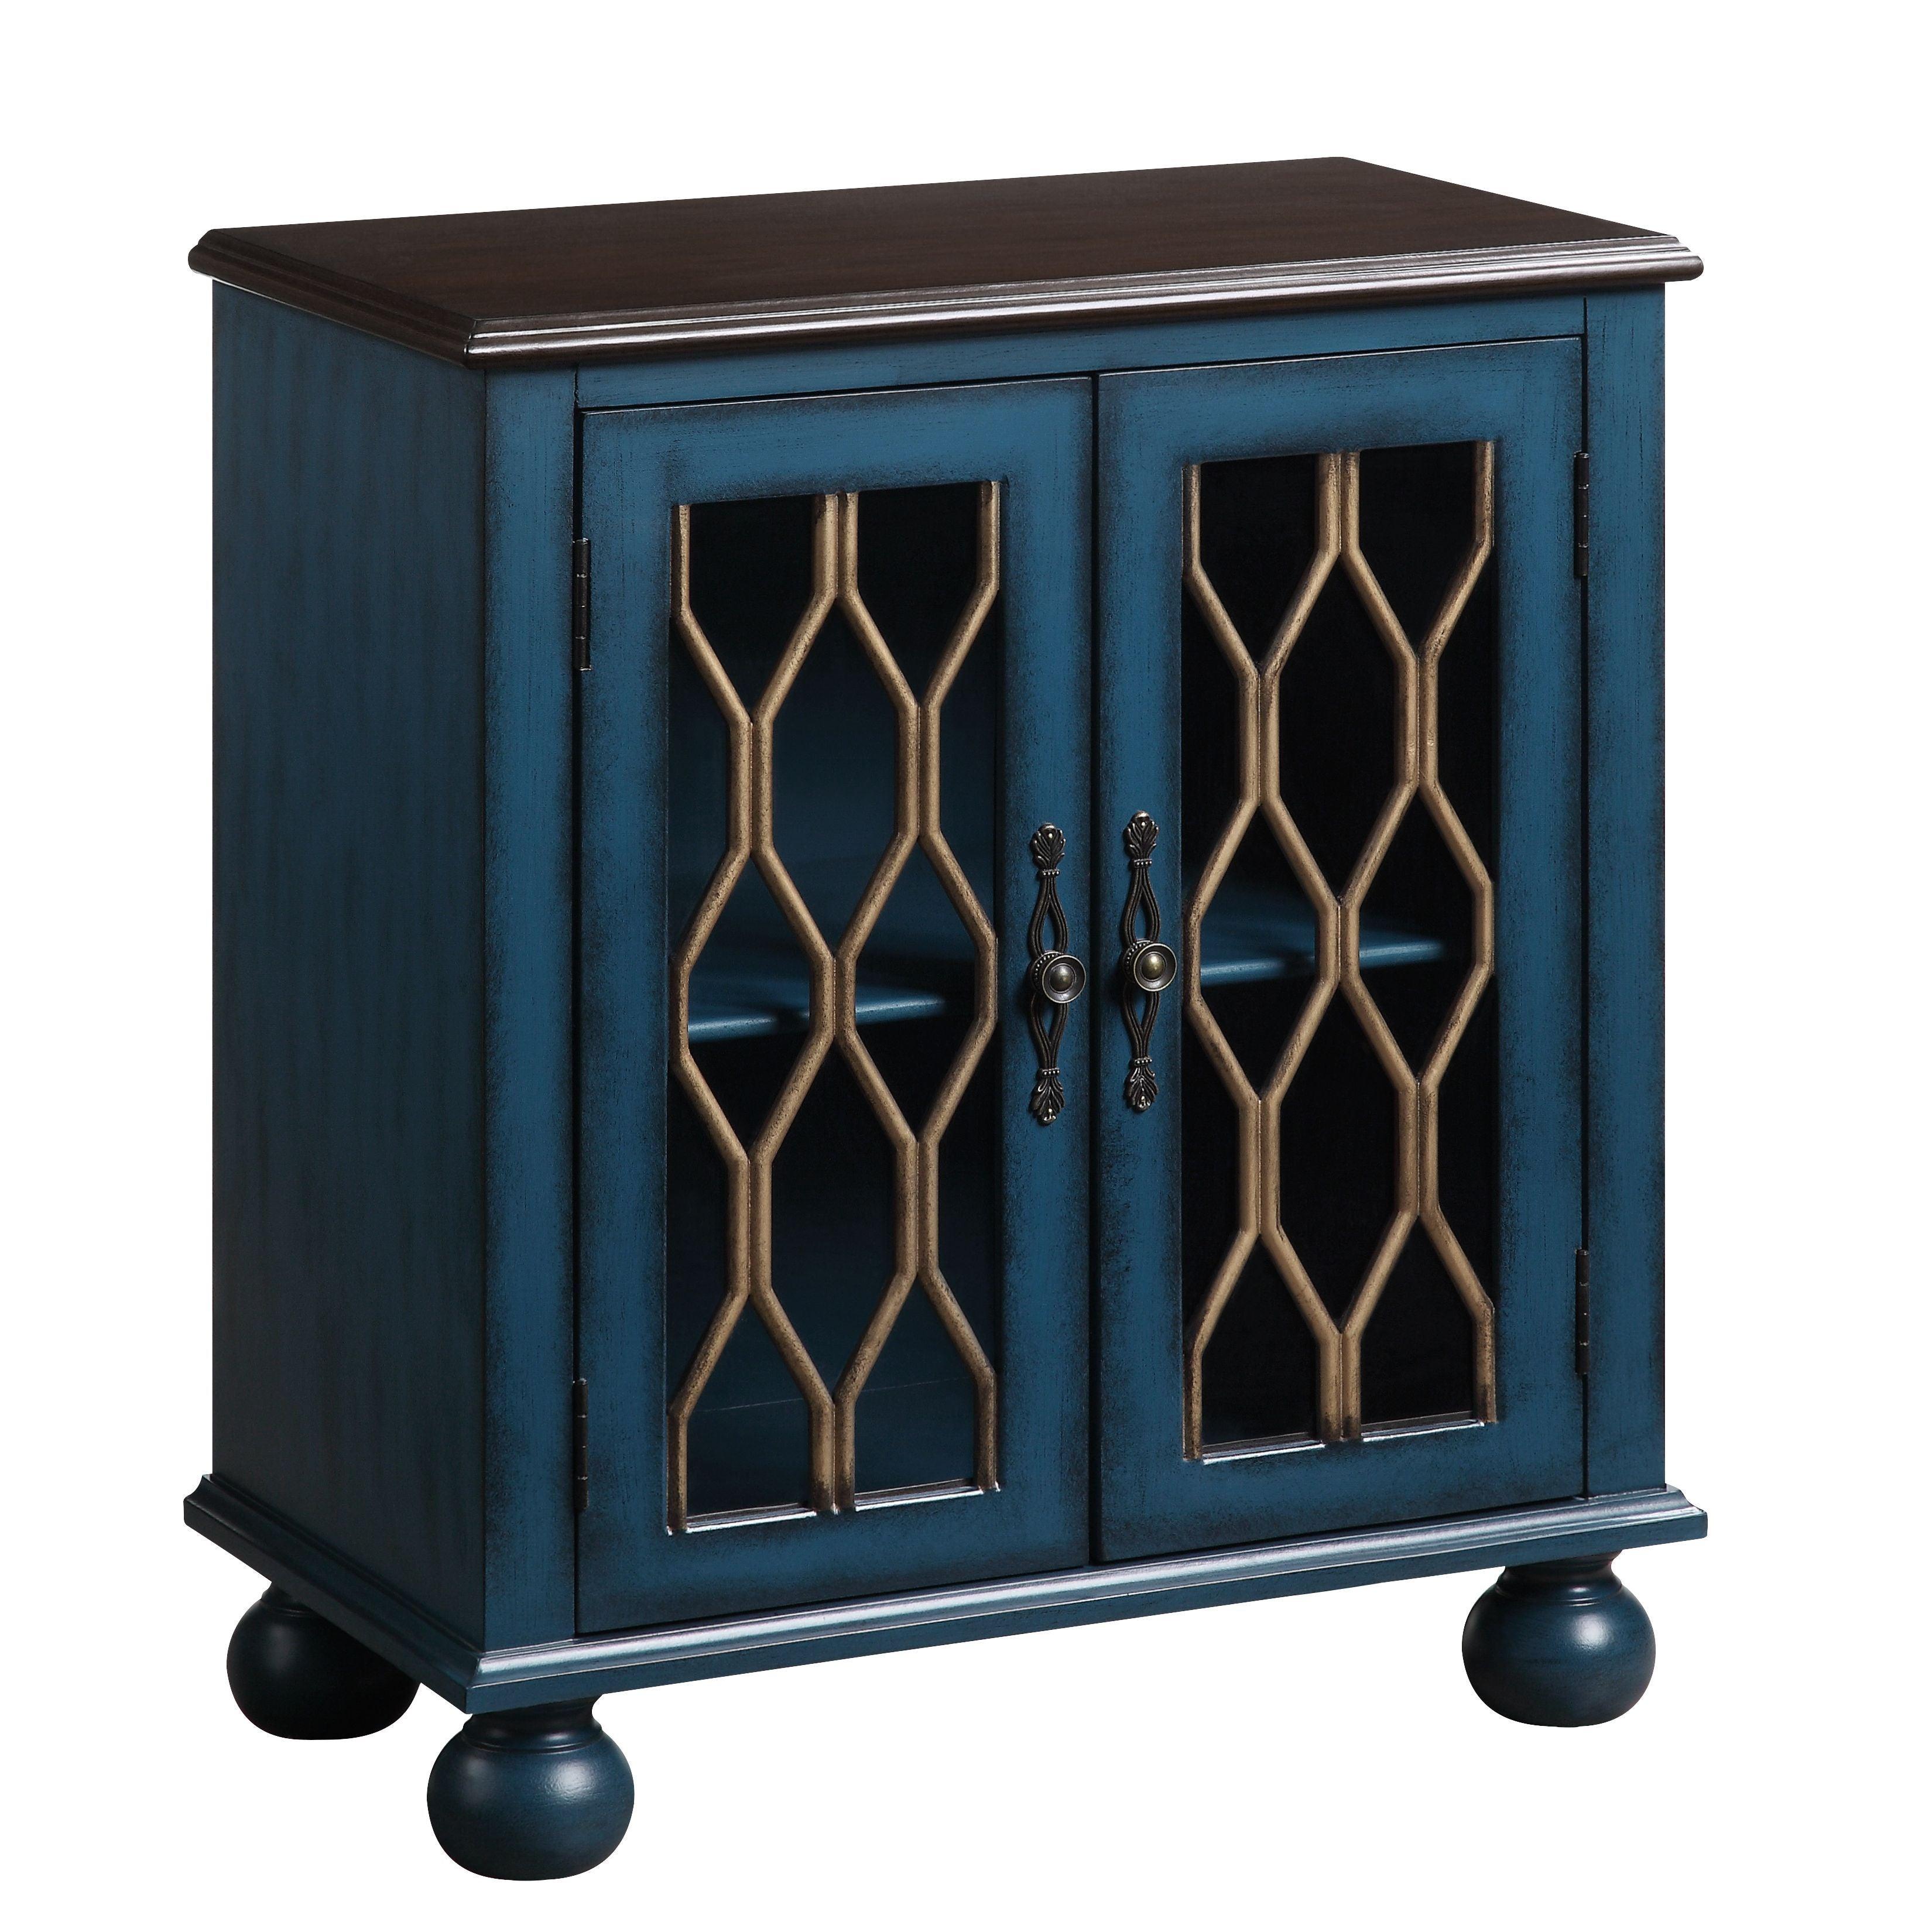 ACME - Lassie - Accent Table - Antique Blue Finish - 5th Avenue Furniture